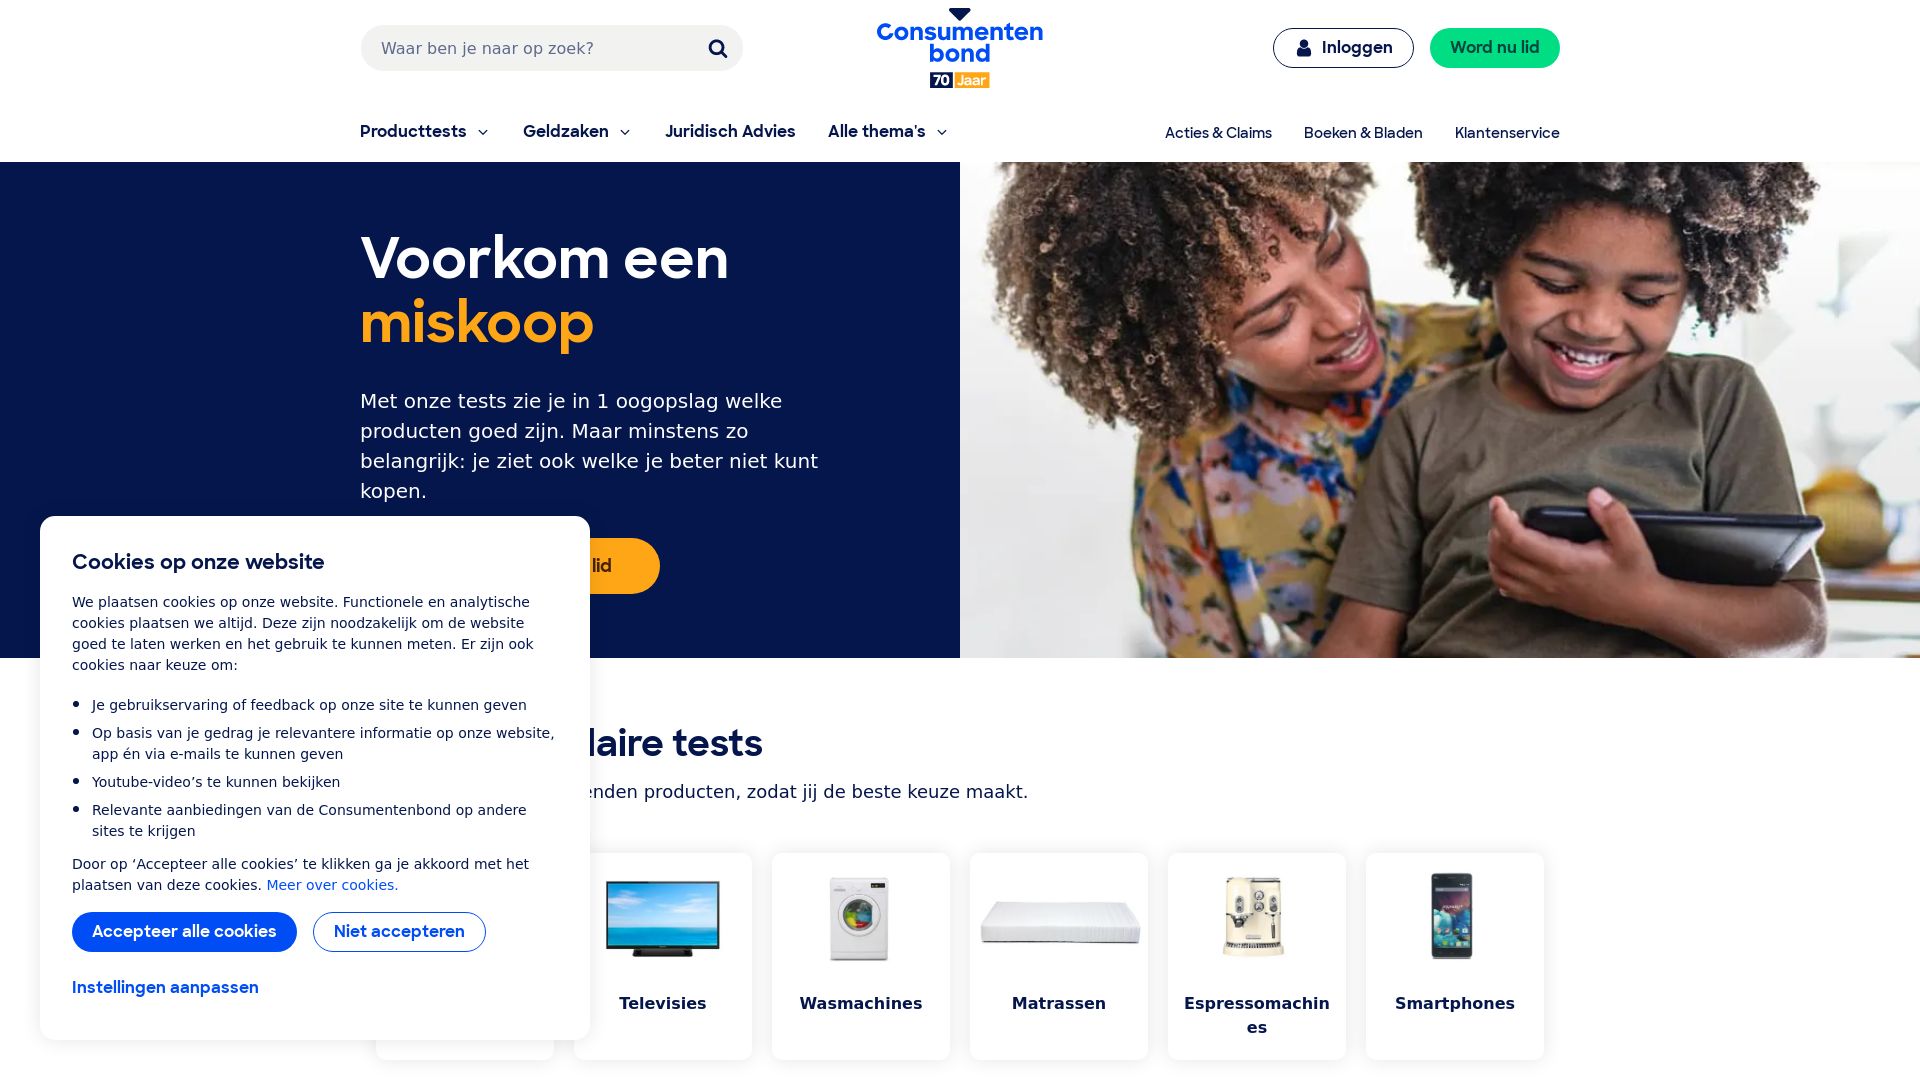 Website status consumentenbond.nl is   ONLINE